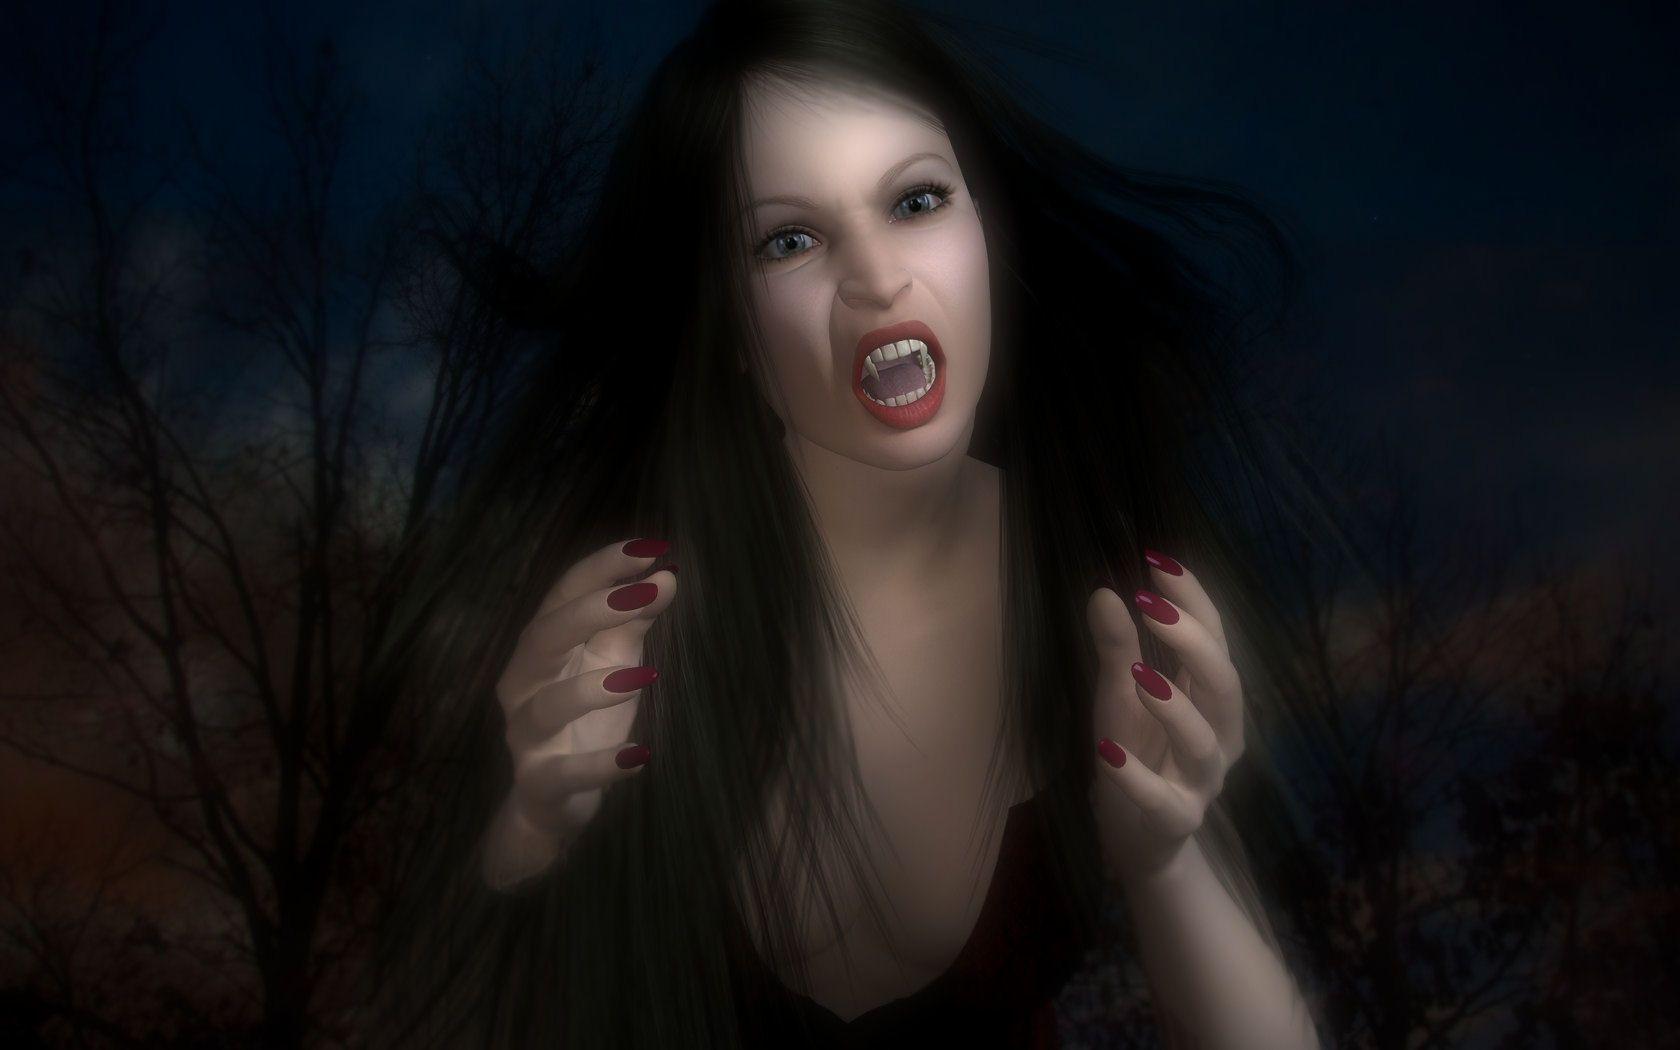 BITEFIGHT fantasy dark horror vampire werewolf monster online mmo evil  action fighting 1bfight strategy halloween spooky moon blood poster  wallpaper, 1920x1080, 646261